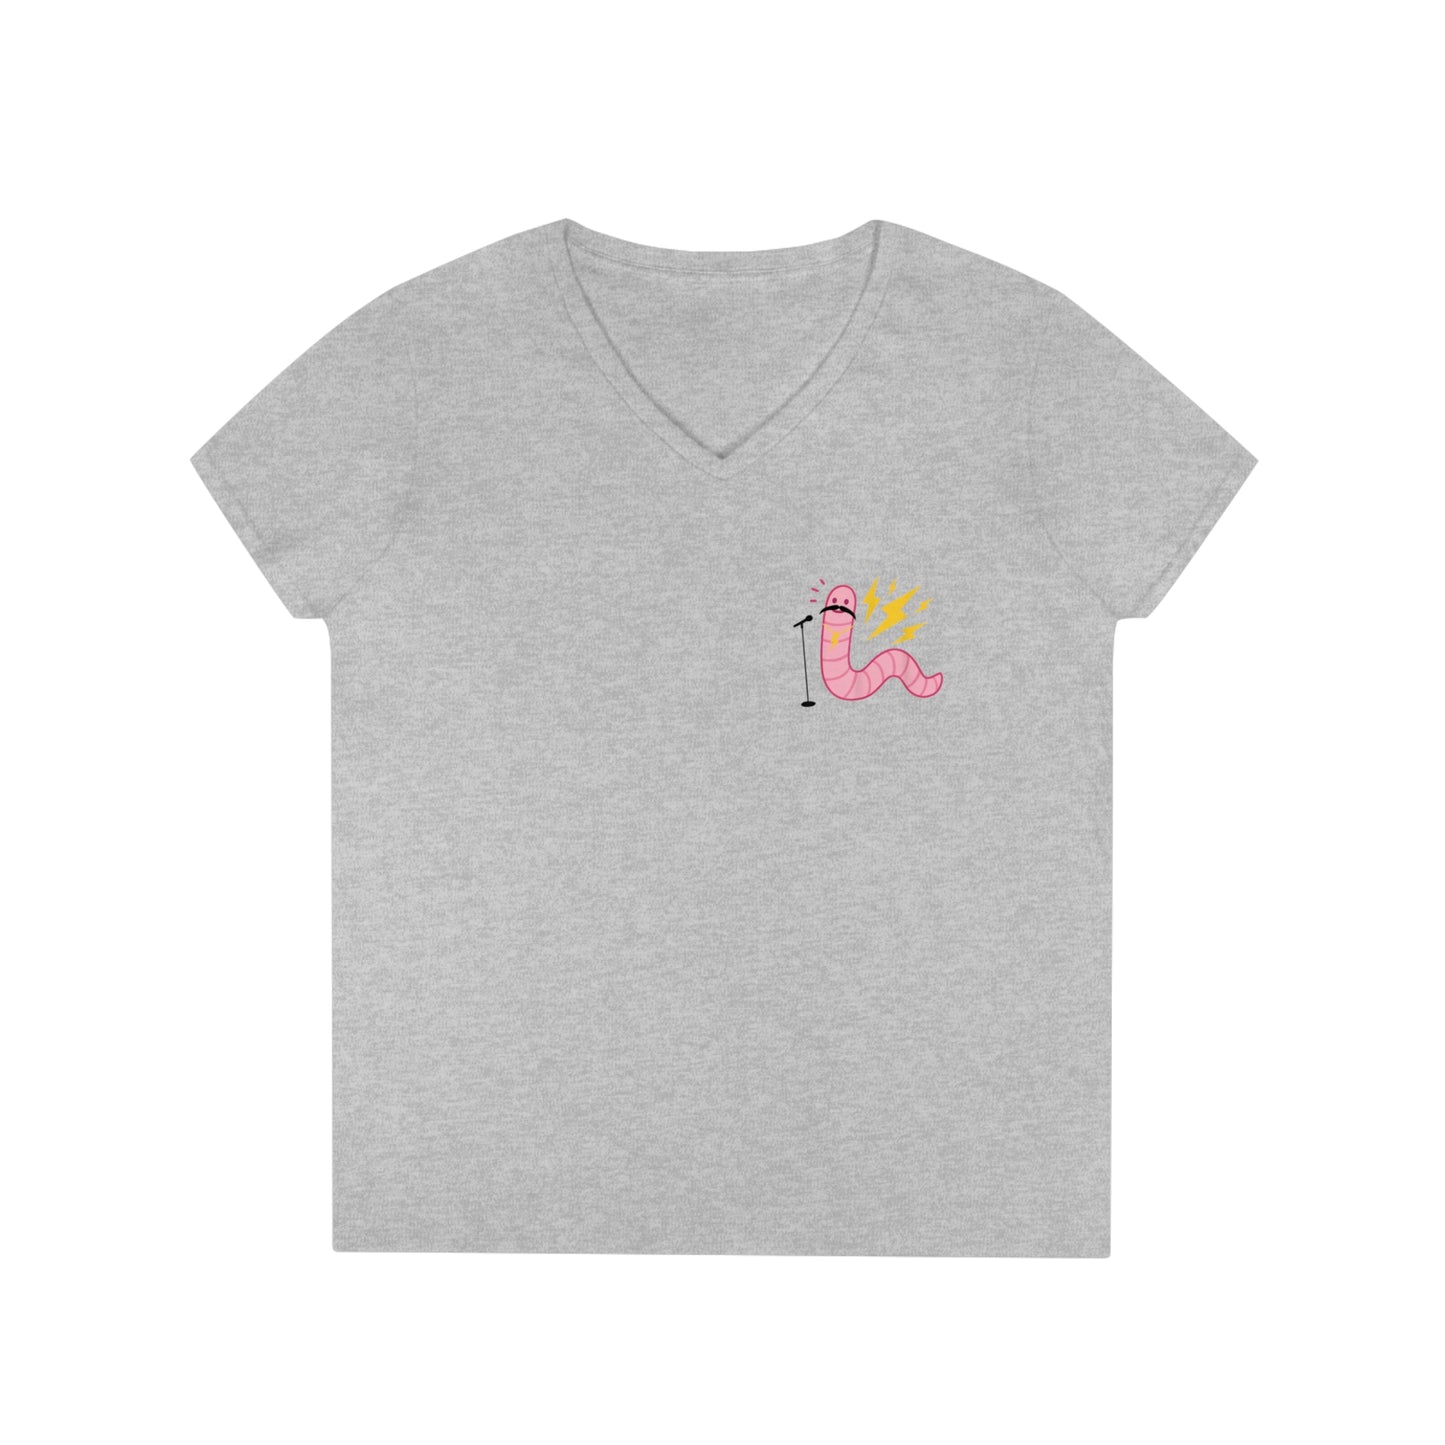 Dip Out Ladies' V-Neck T-Shirt